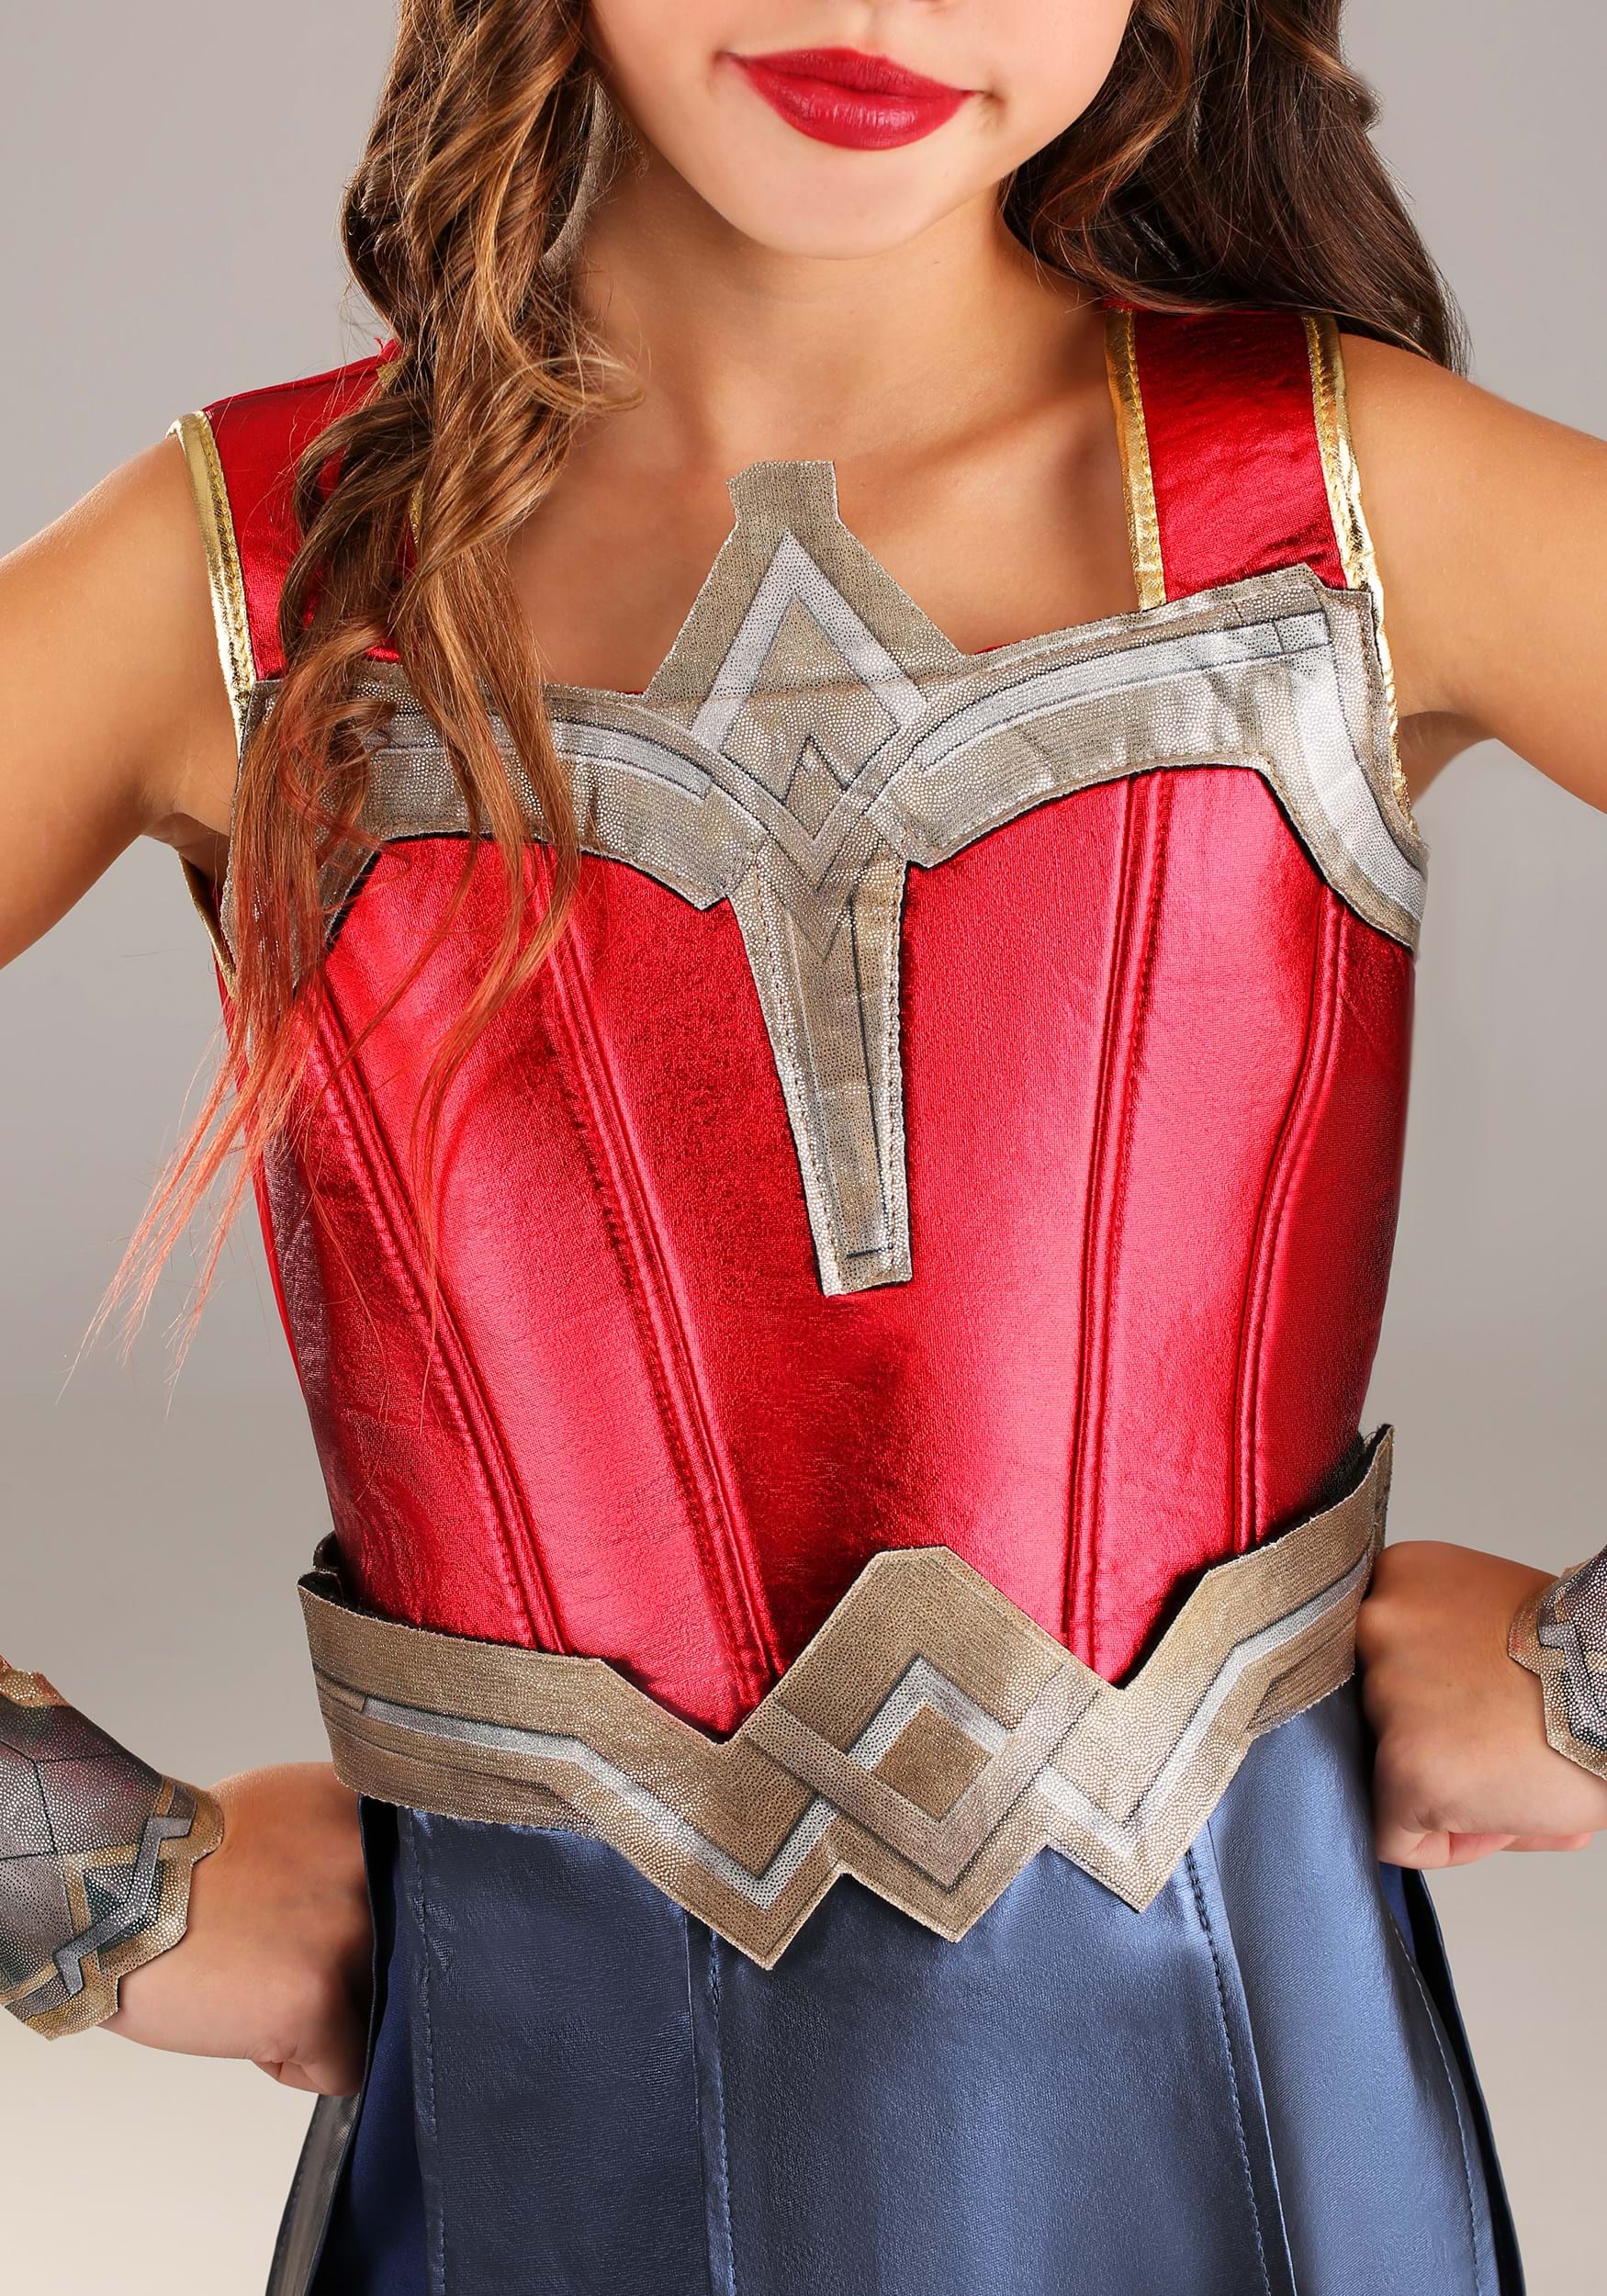 Wonder Woman 84 Costume For Girls